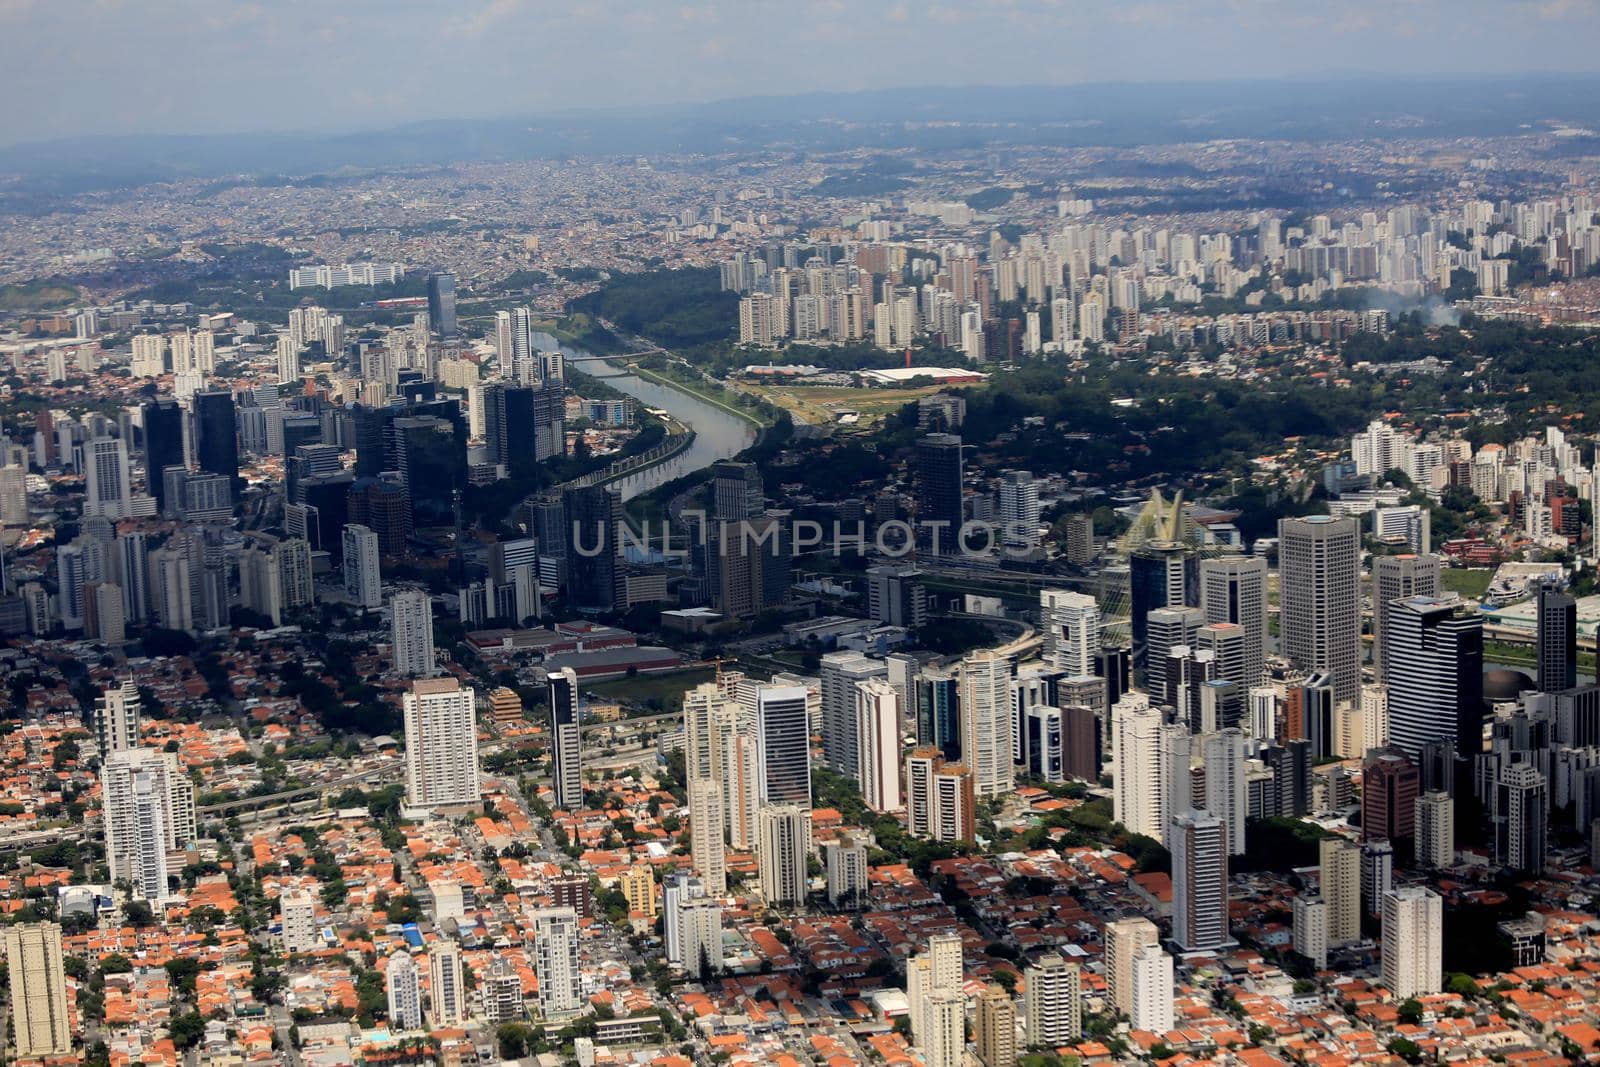 sao paulo, sao paulo / brazil - february 11, 2017: Aerial view of the city of Sao Paulo.